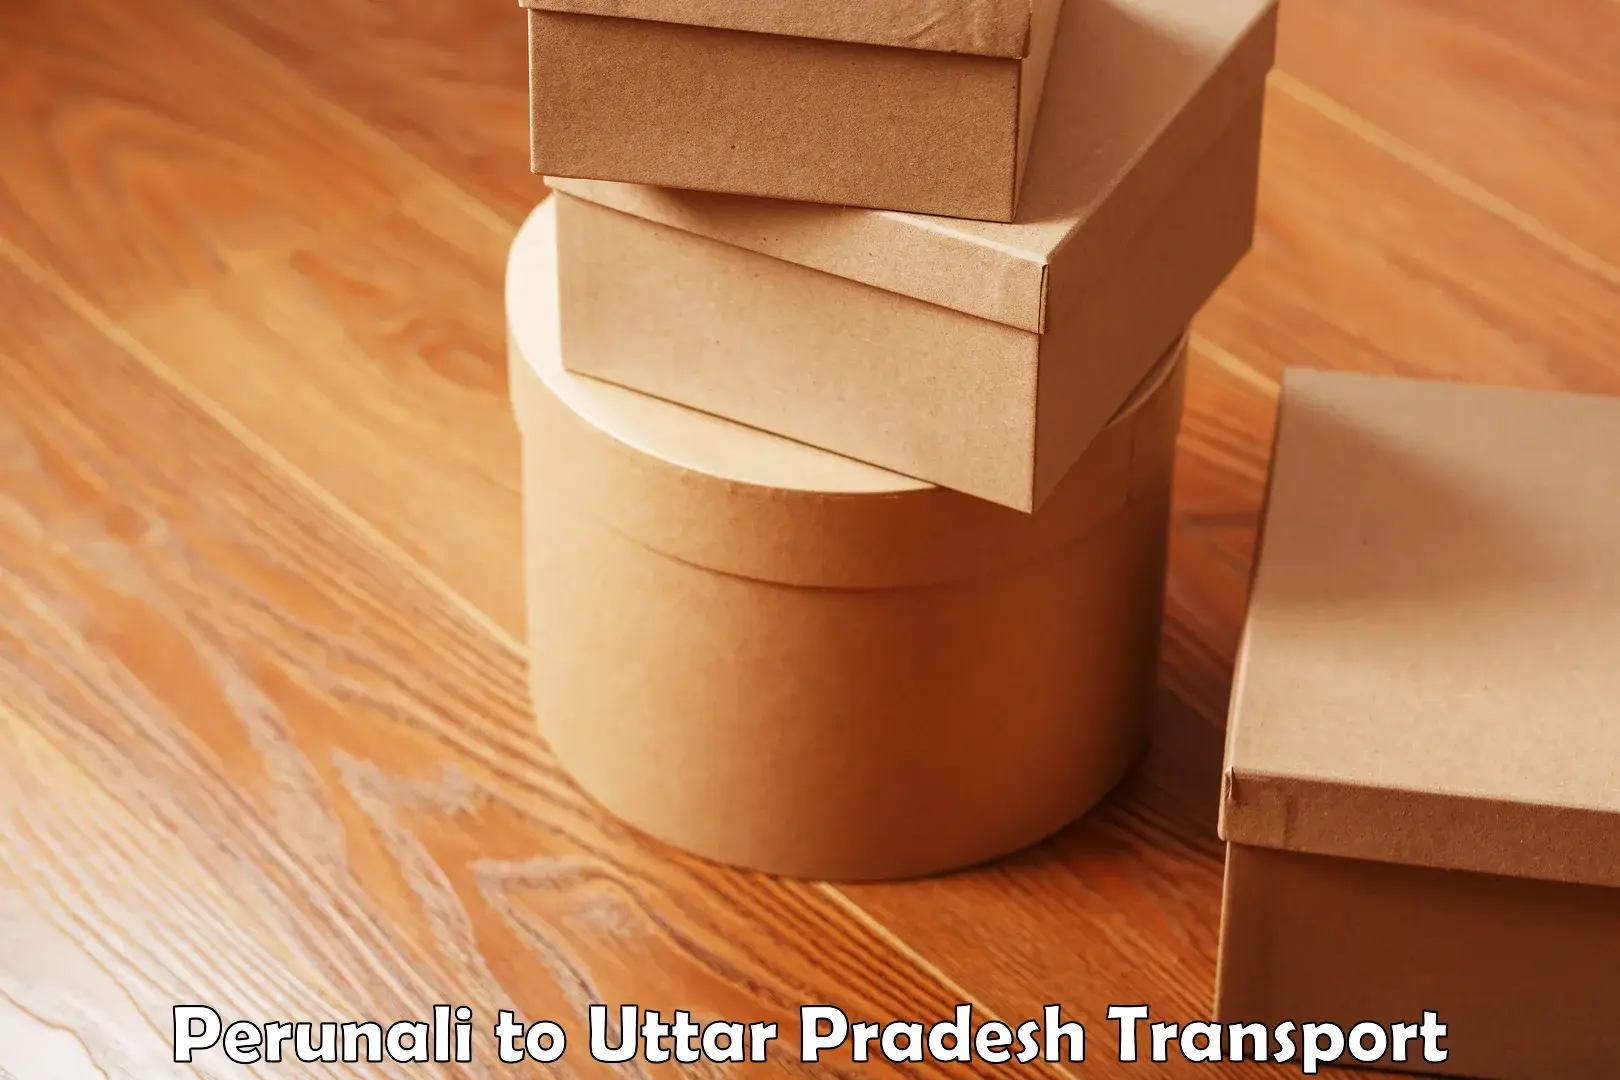 Transport in sharing Perunali to Uttar Pradesh